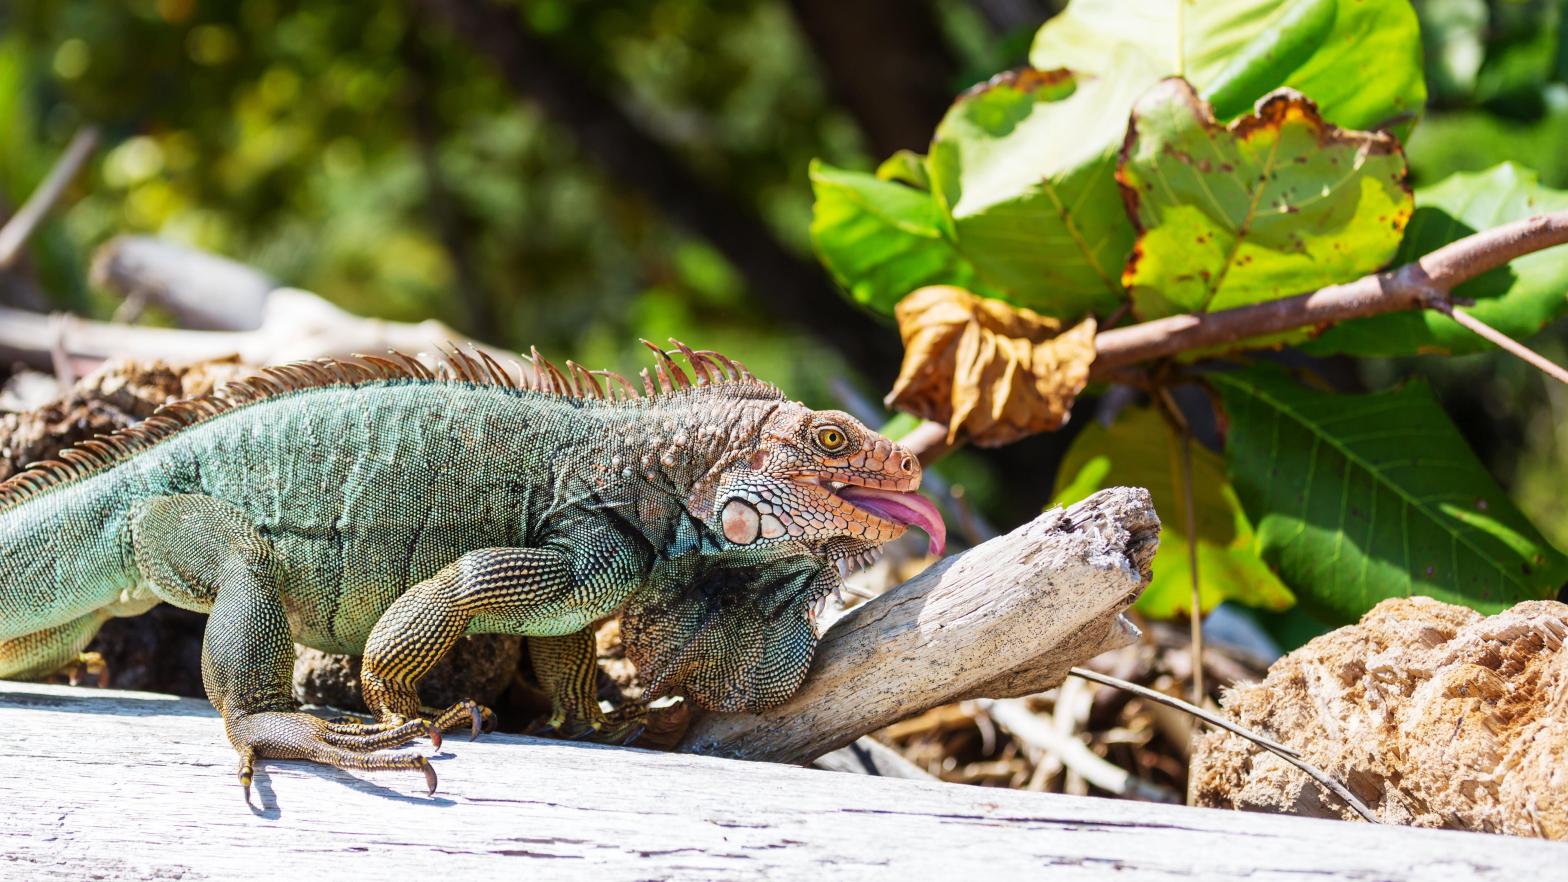 A wild green iguana in Costa Rica. (Image: Galyna Andrushko, Shutterstock)